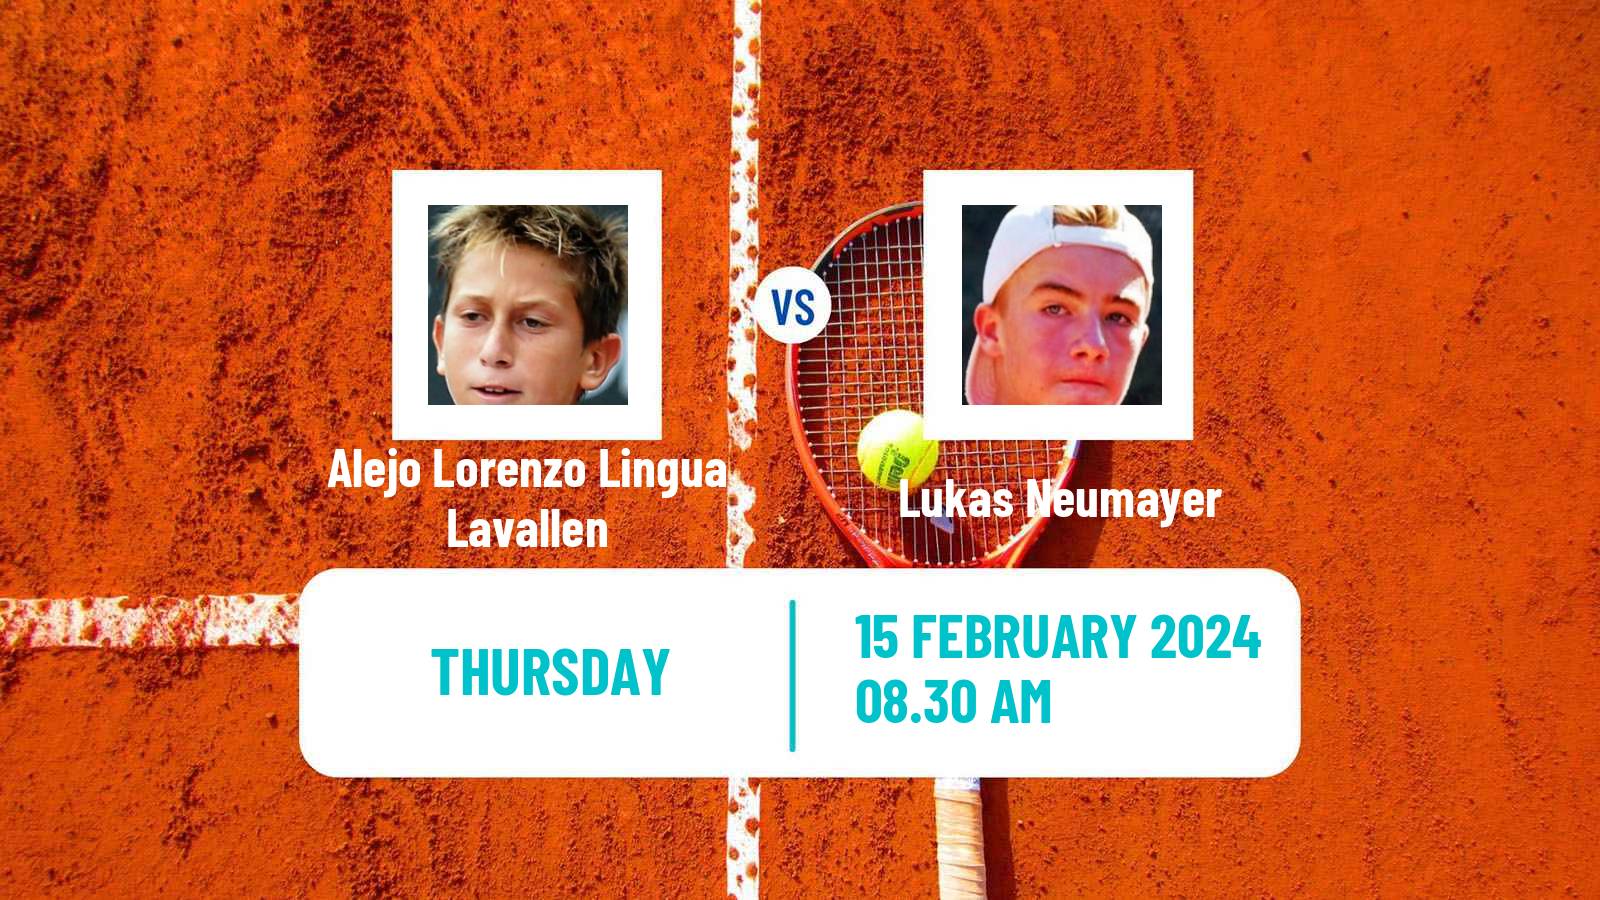 Tennis ITF M25 Antalya 6 Men Alejo Lorenzo Lingua Lavallen - Lukas Neumayer